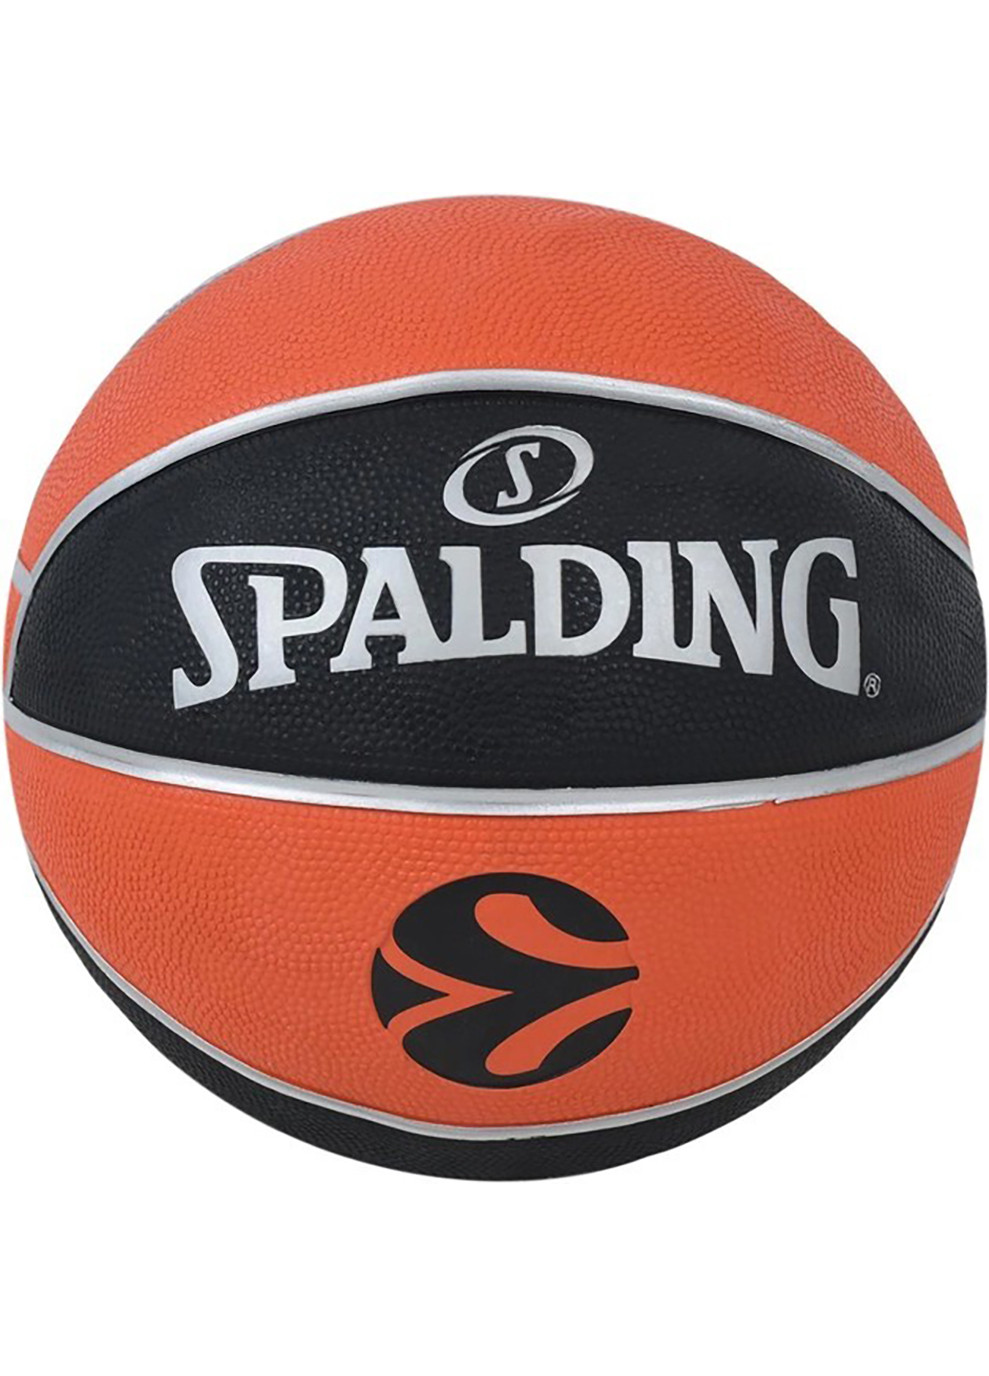 Баскетбольный Мяч Euroleague TF-150 оранжевый Уни Spalding (260634127)